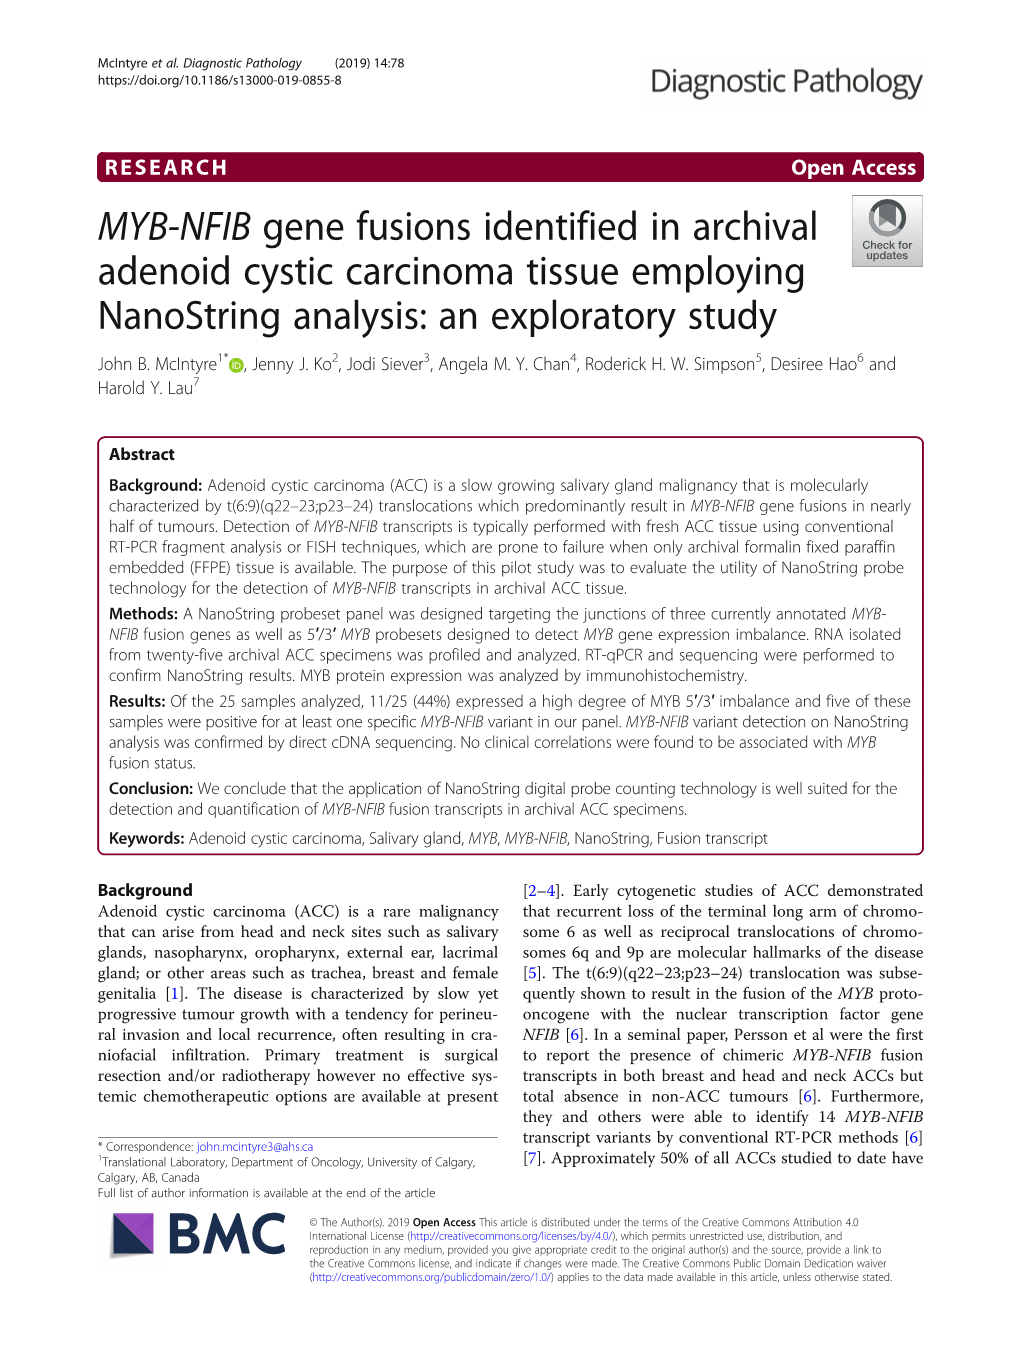 MYB-NFIB Gene Fusions Identified in Archival Adenoid Cystic Carcinoma Tissue Employing Nanostring Analysis: an Exploratory Study John B